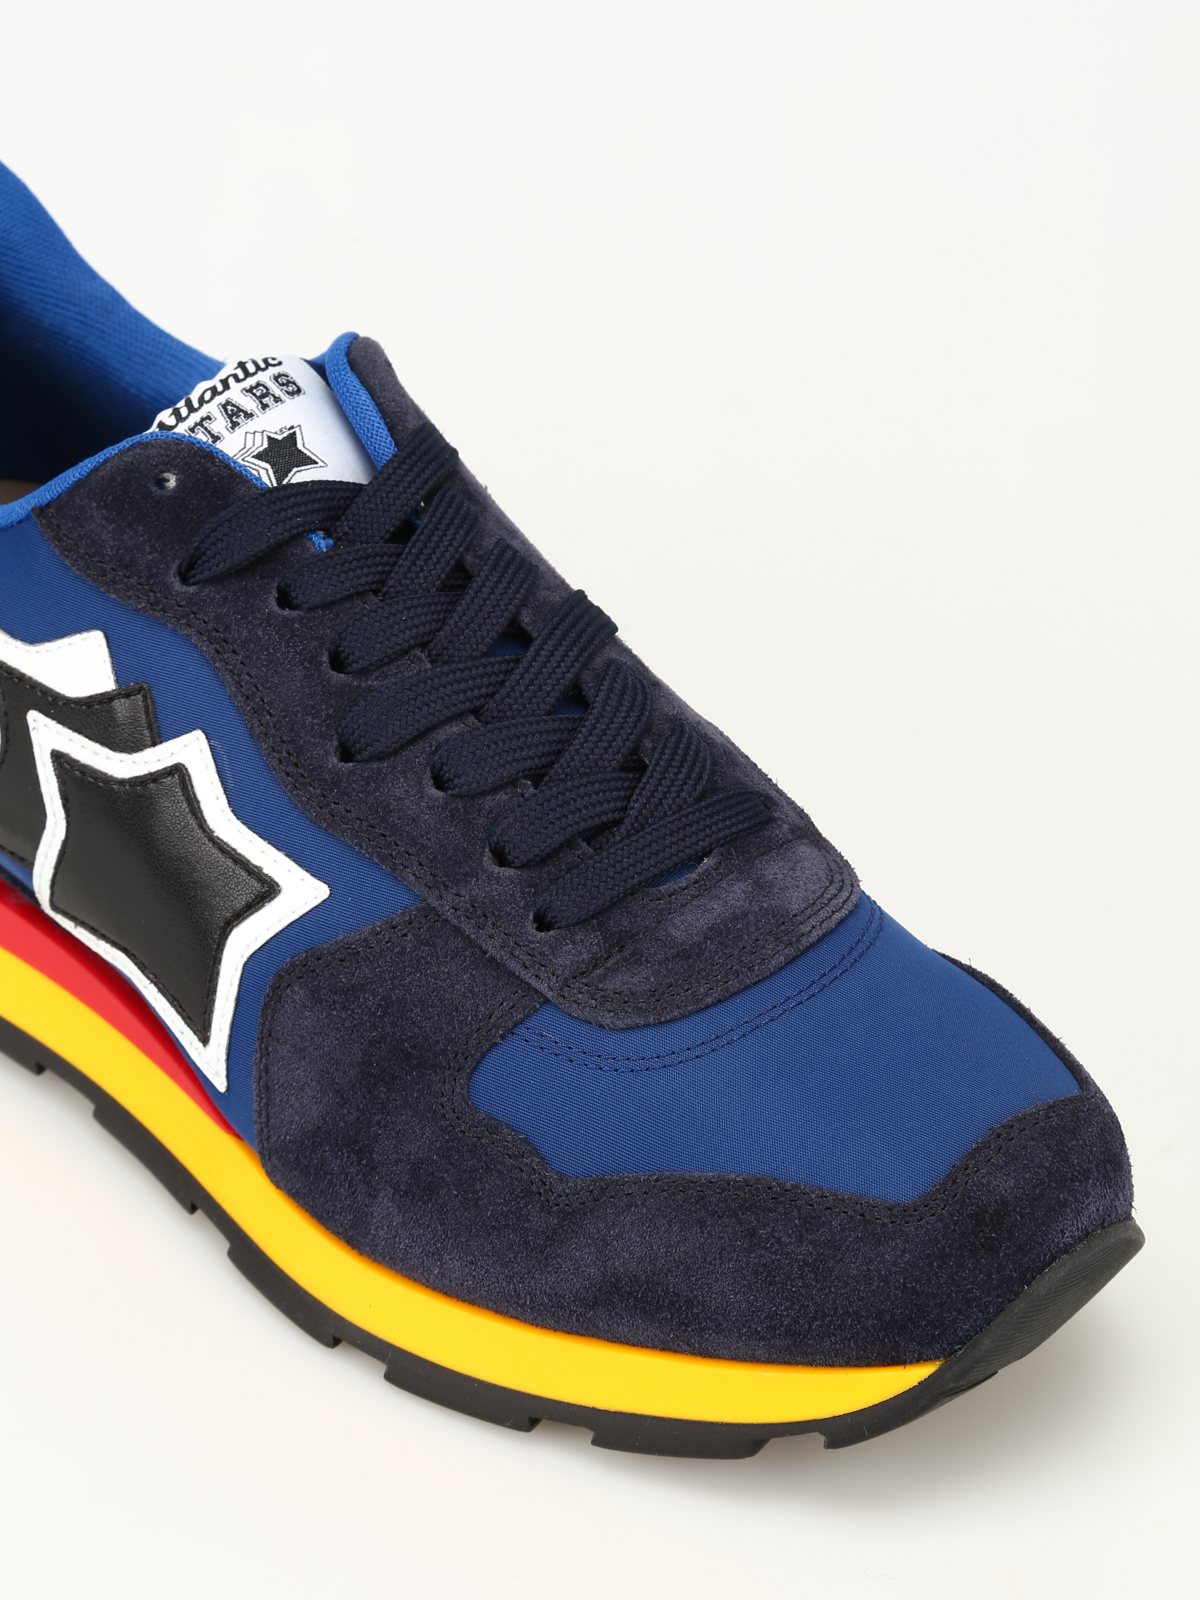 Atlantic Stars - Antares blue red yellow sneakers - trainers - ANTARAAB89B